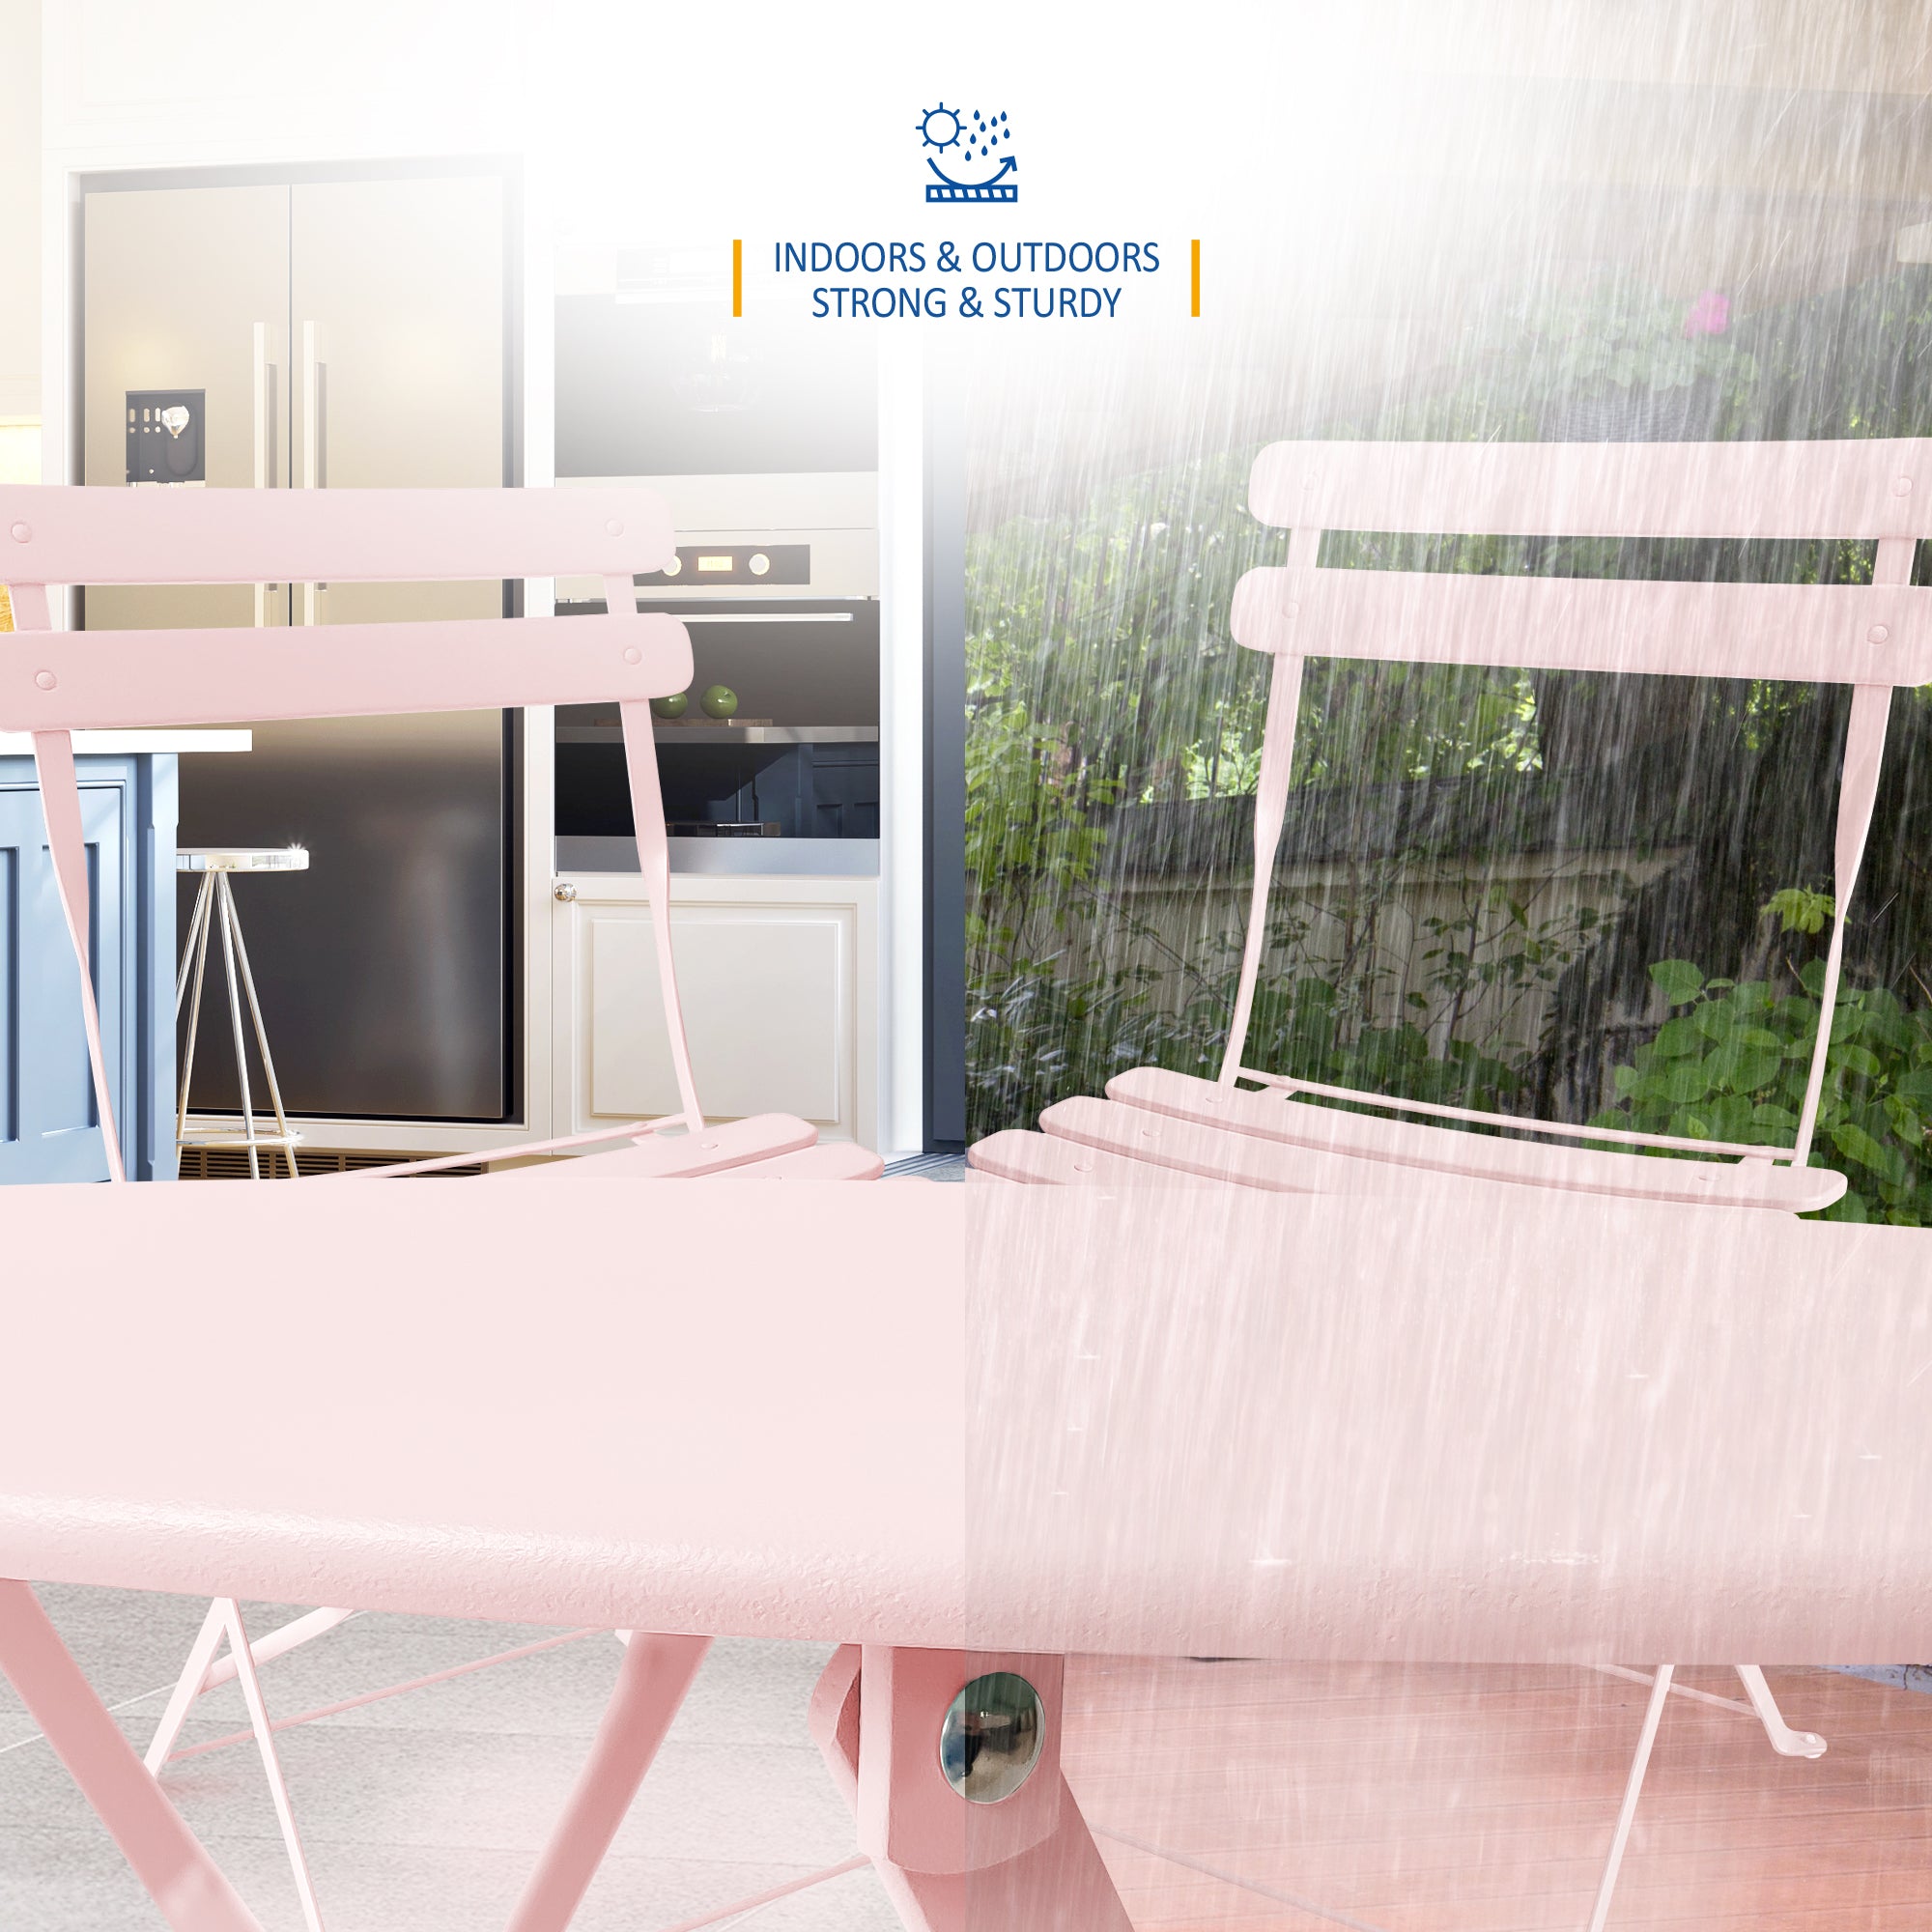 Garden Bistro Table & Chairs Set Pink